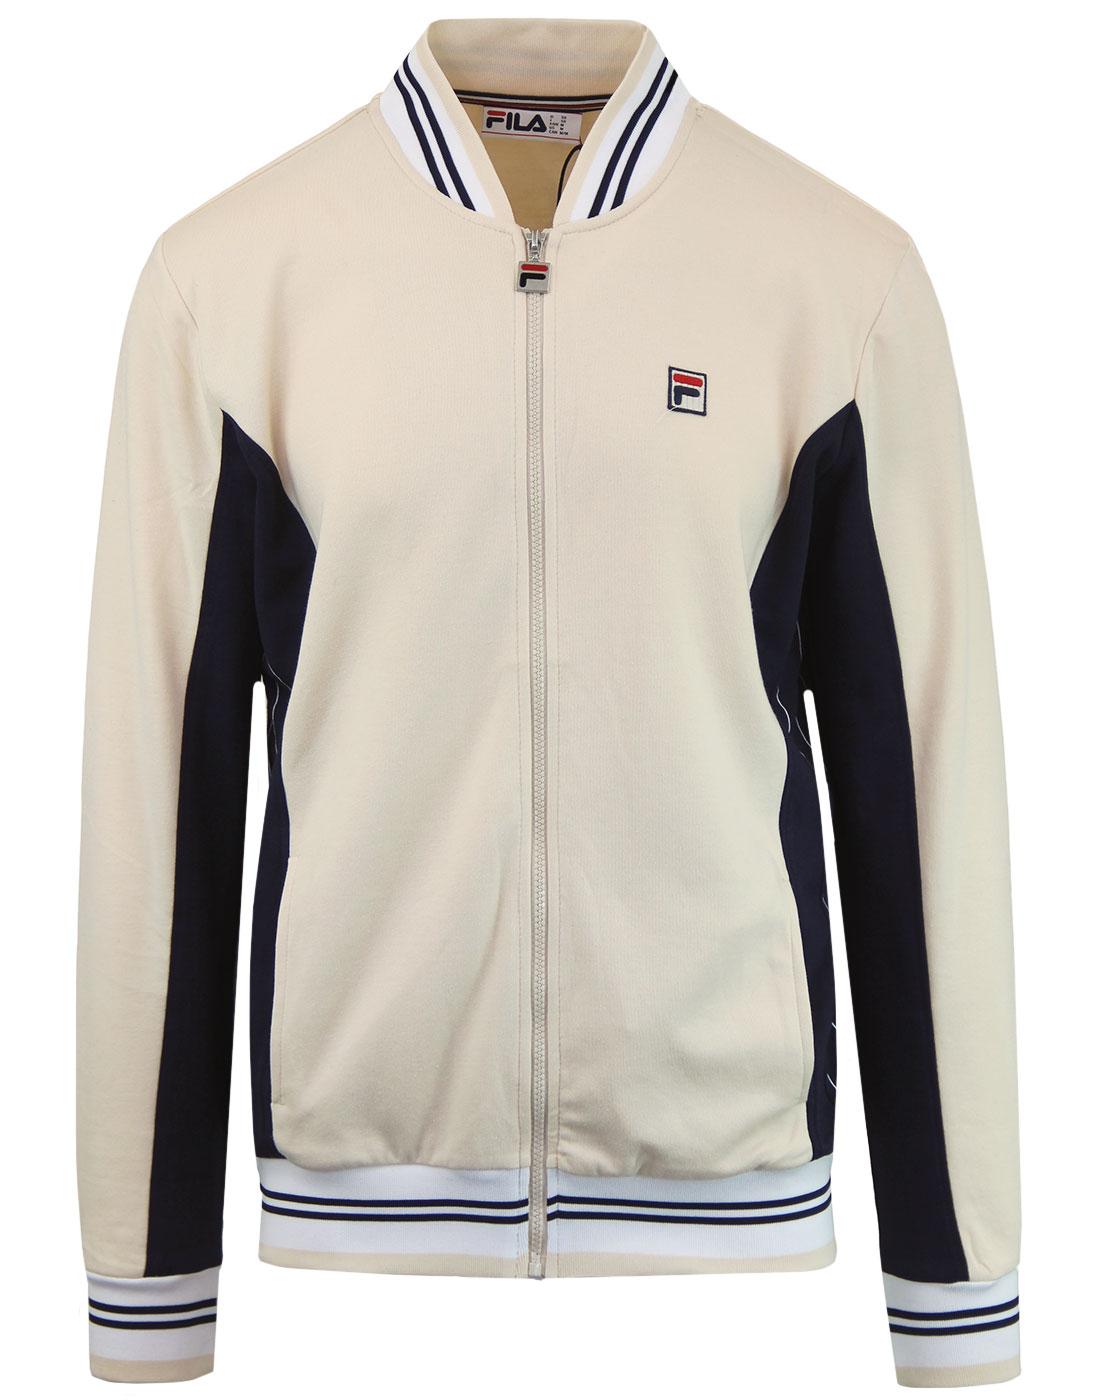 fila men's vintage settanta jacket